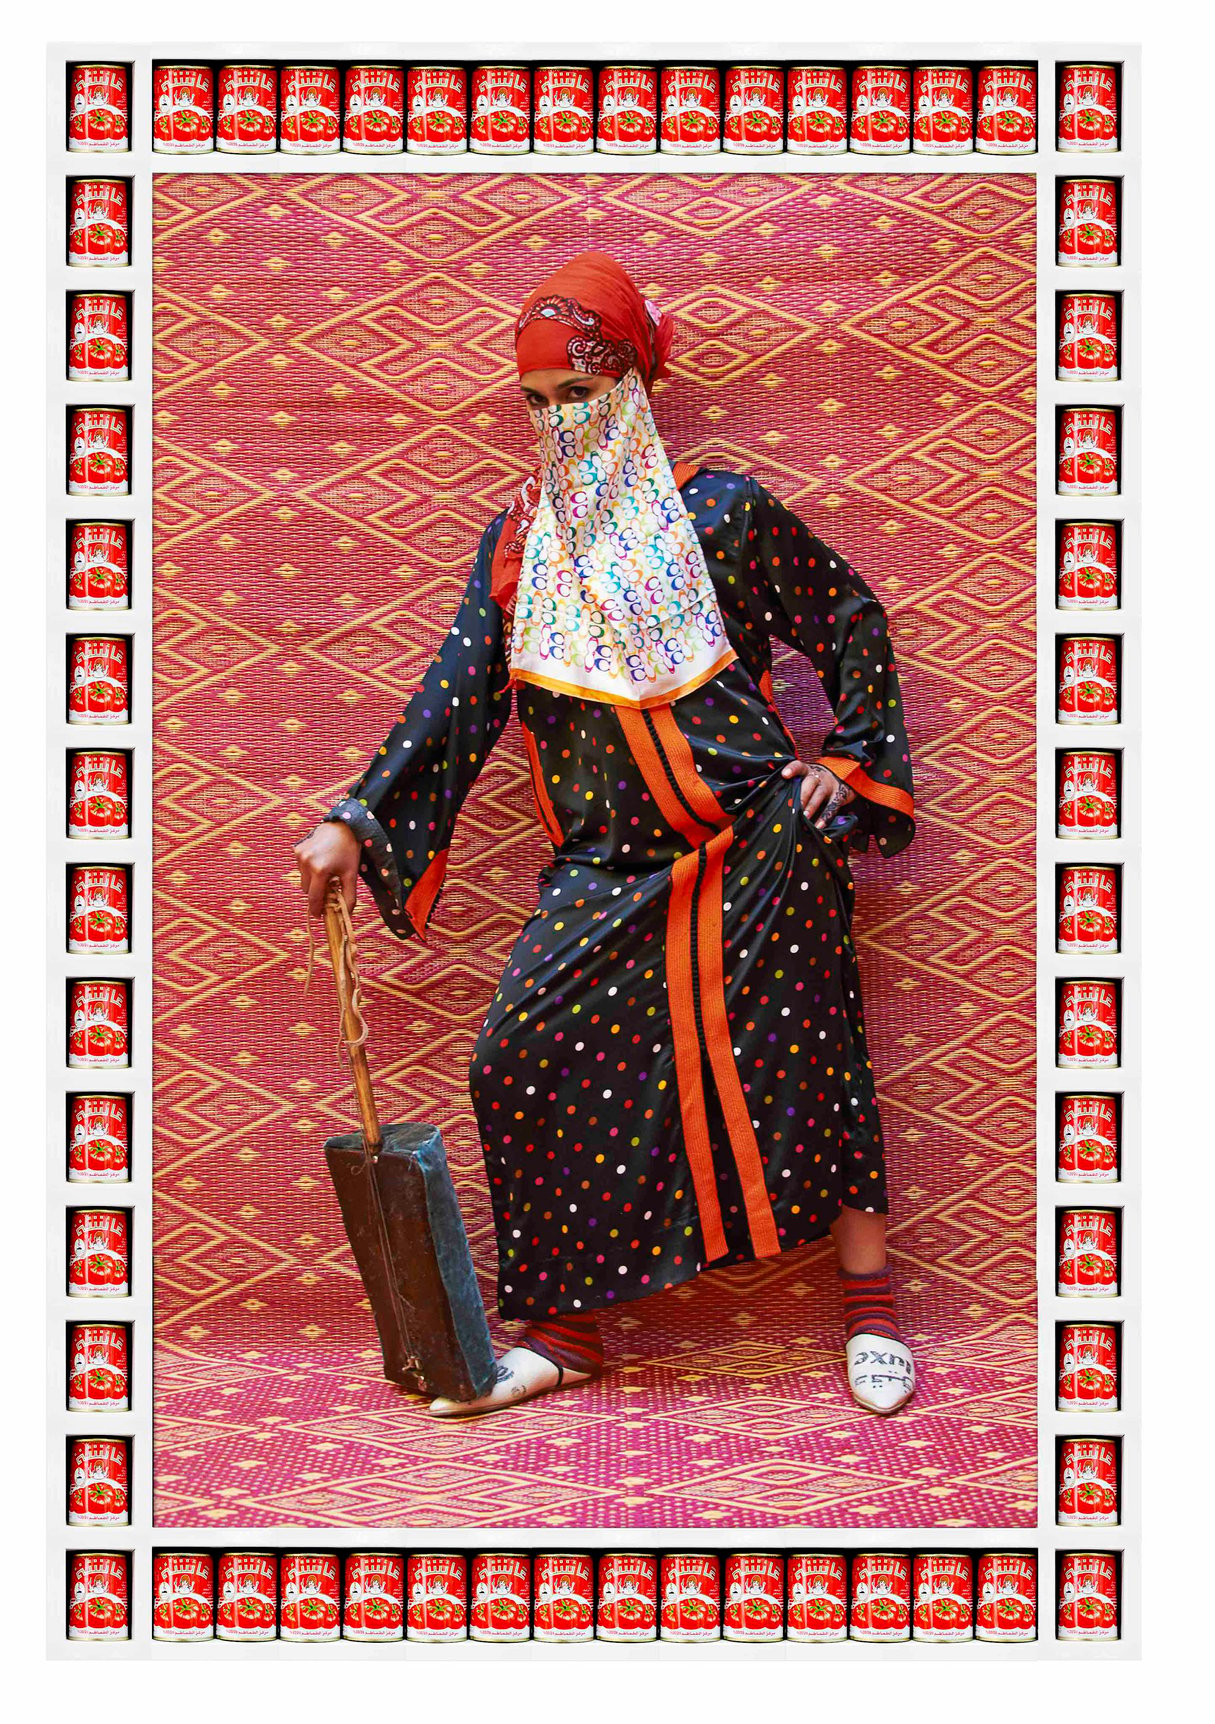 Hassan Hajjaj, "Marmouche", 2012. &copy; Hassan Hajjaj